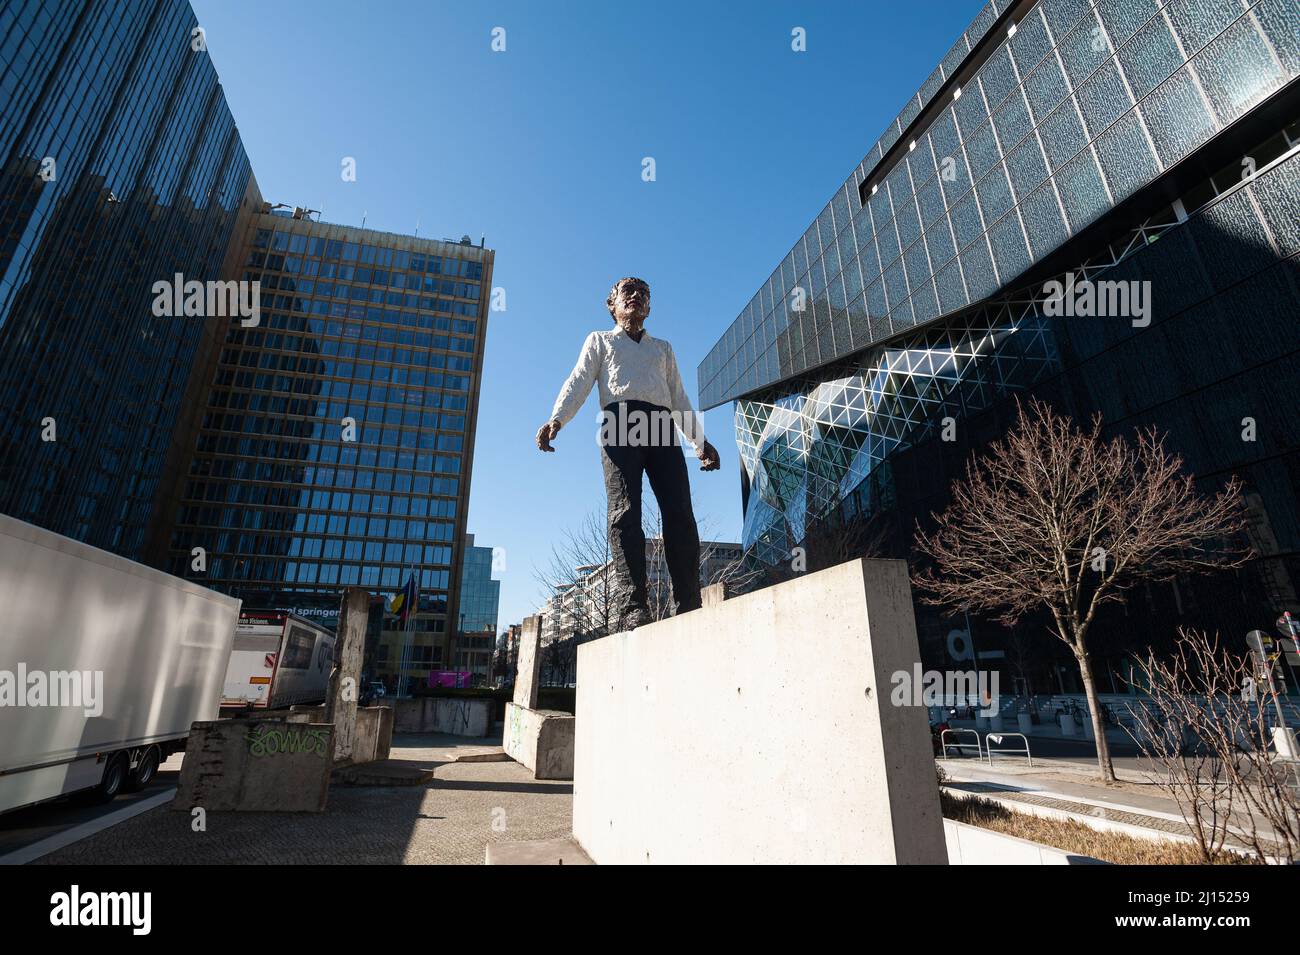 12.03.2022, Berlino, Germania, Europa - scultura 'Balanceakt' (Balancing Act), opera dello scultore tedesco Stephan Balkenhol presso l'edificio Axel Springer. Foto Stock